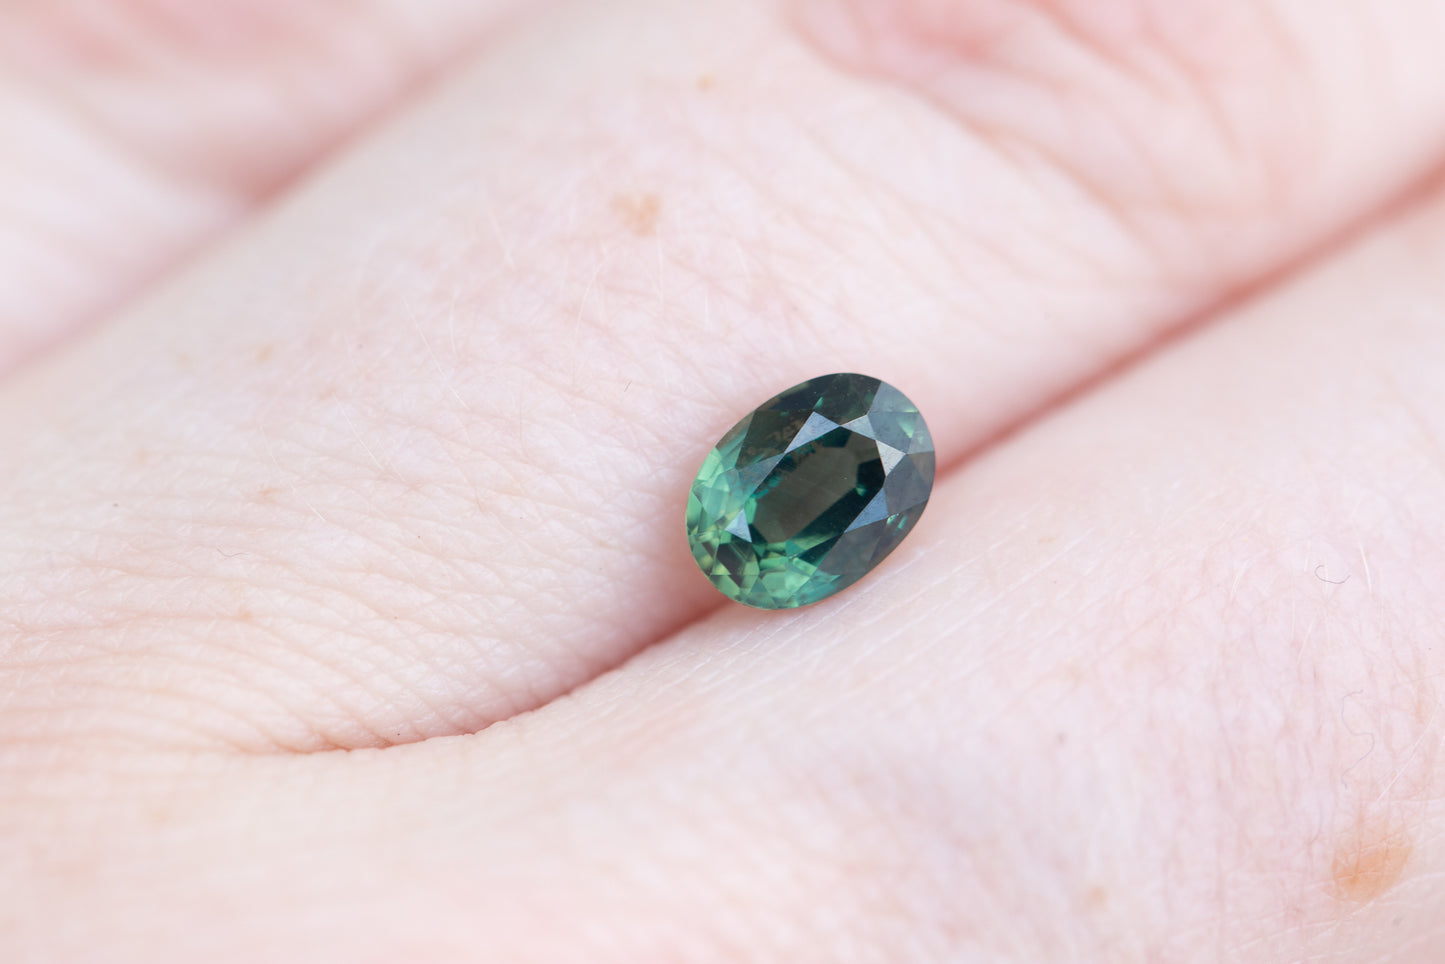 1.1ct oval deep green hint of blue sapphire